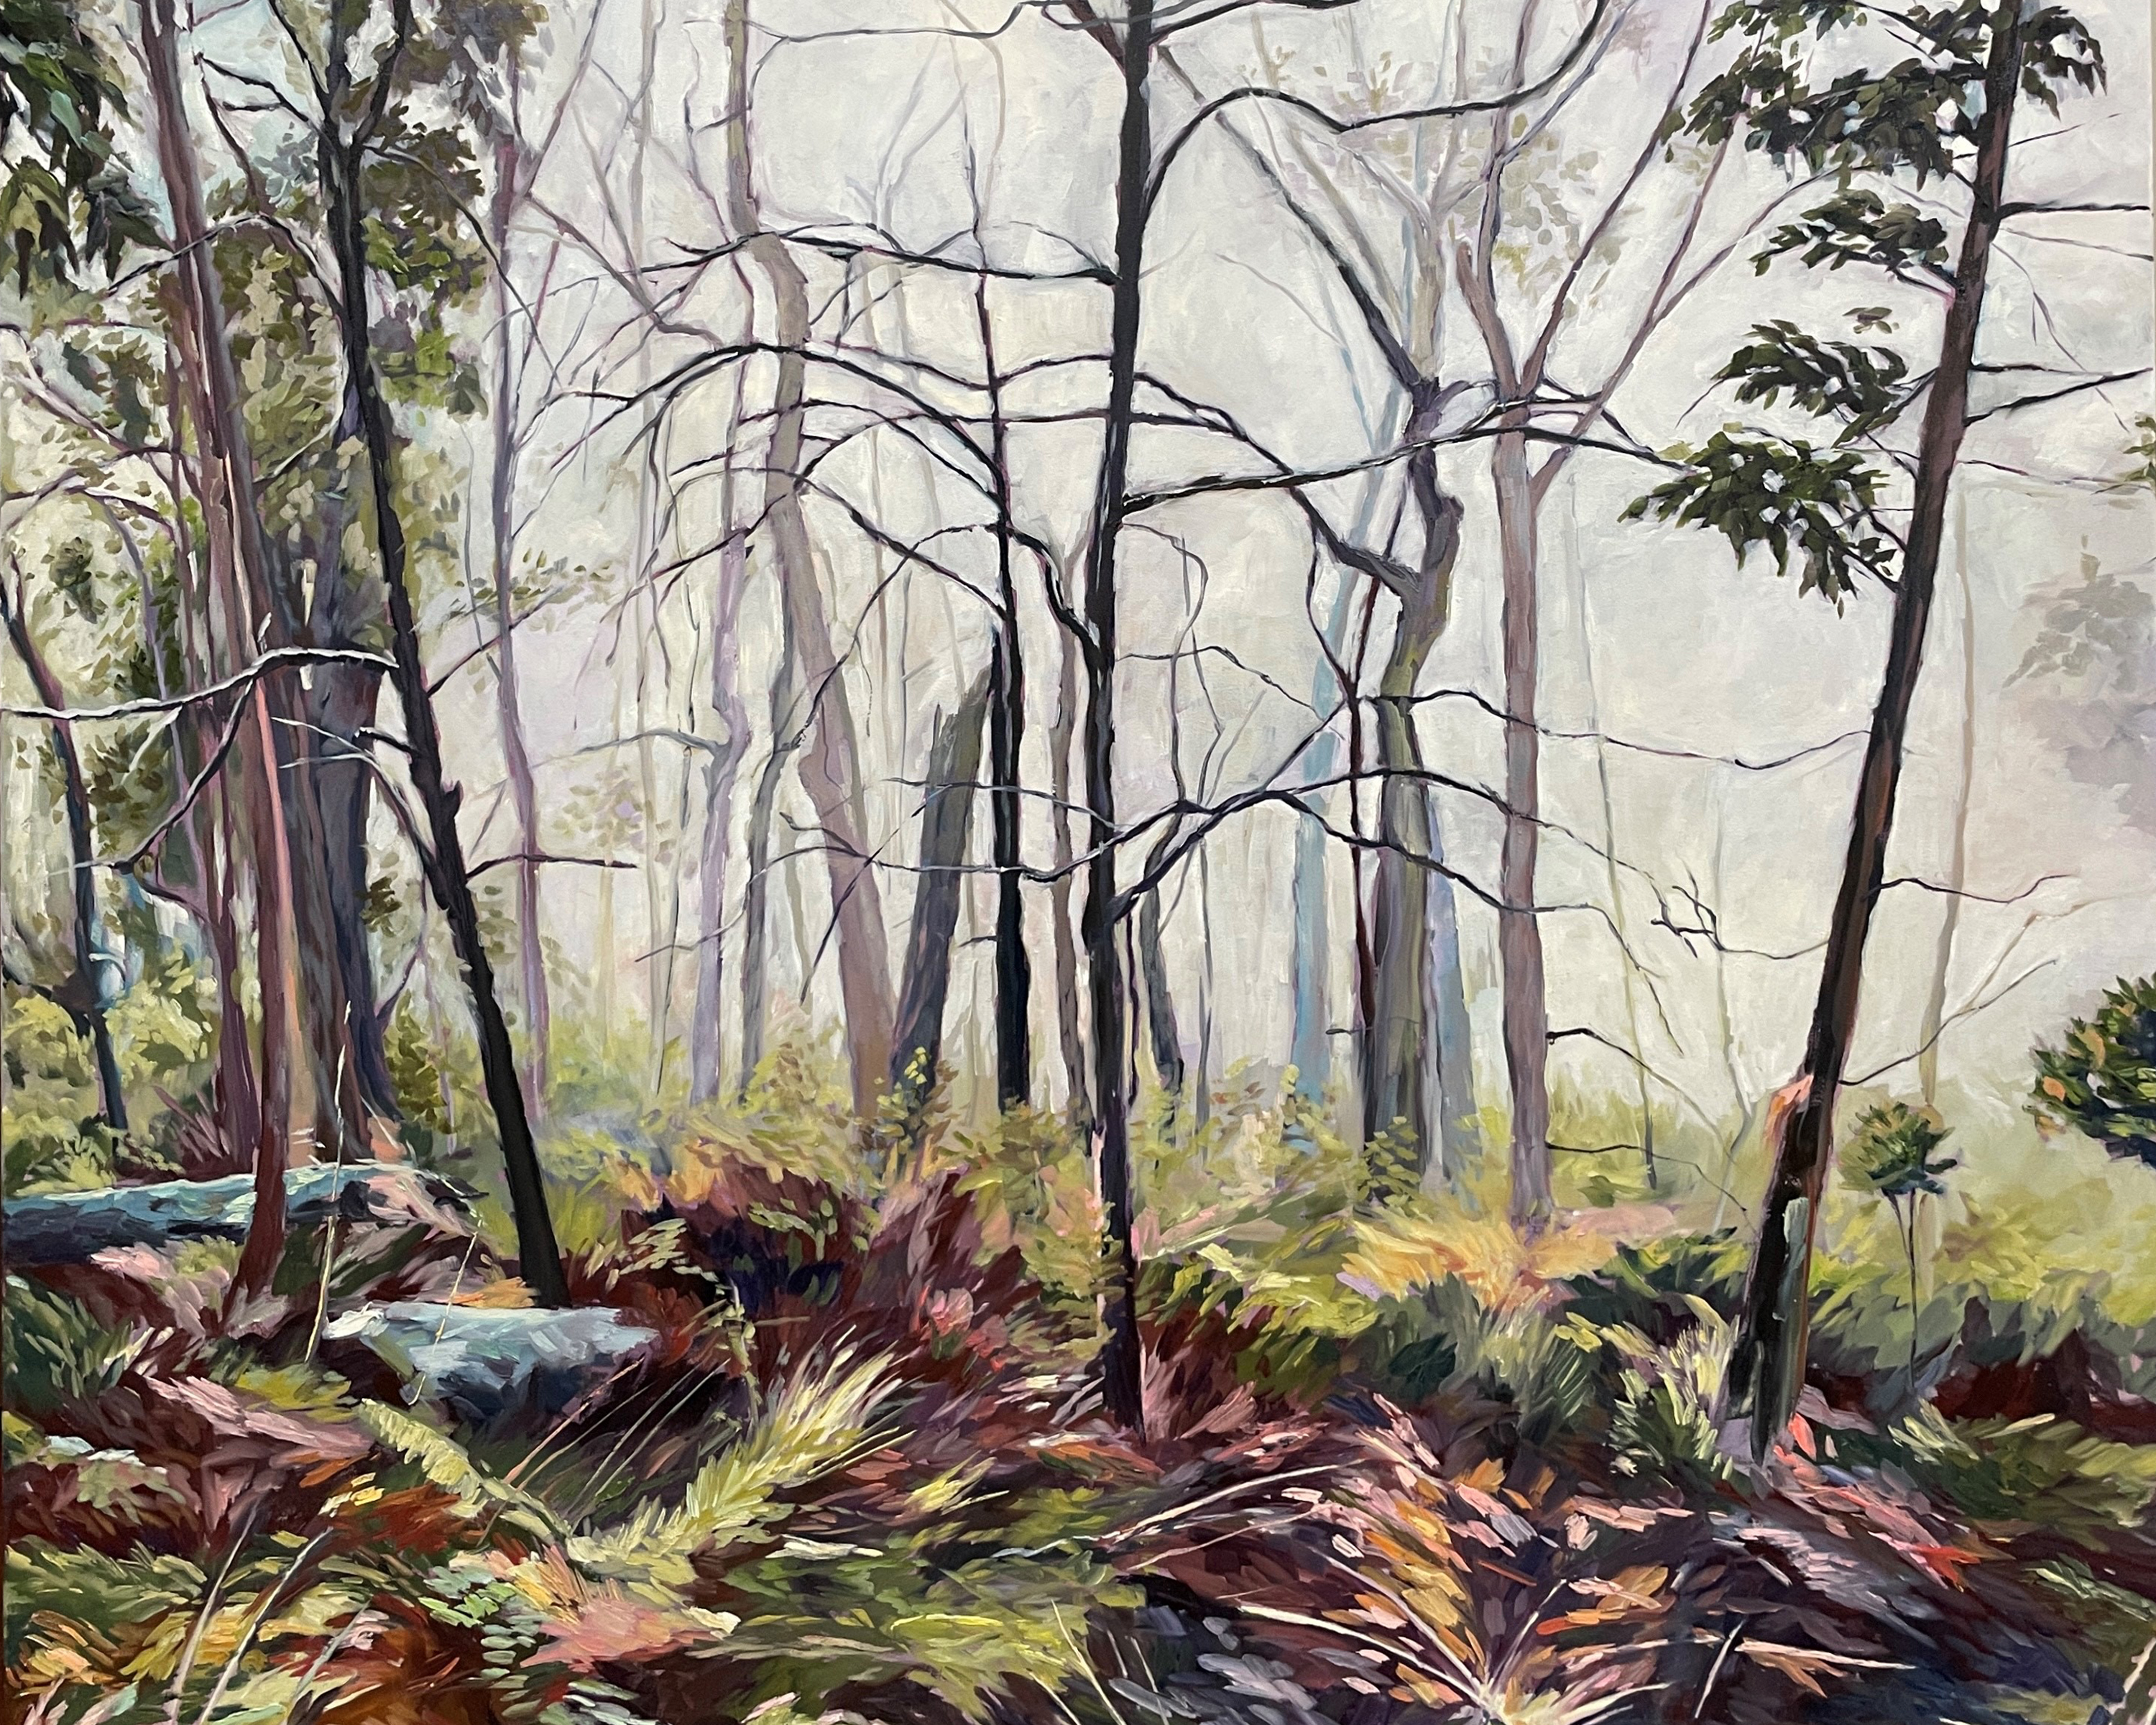 A landscape of a misty and sparse bushland scene.